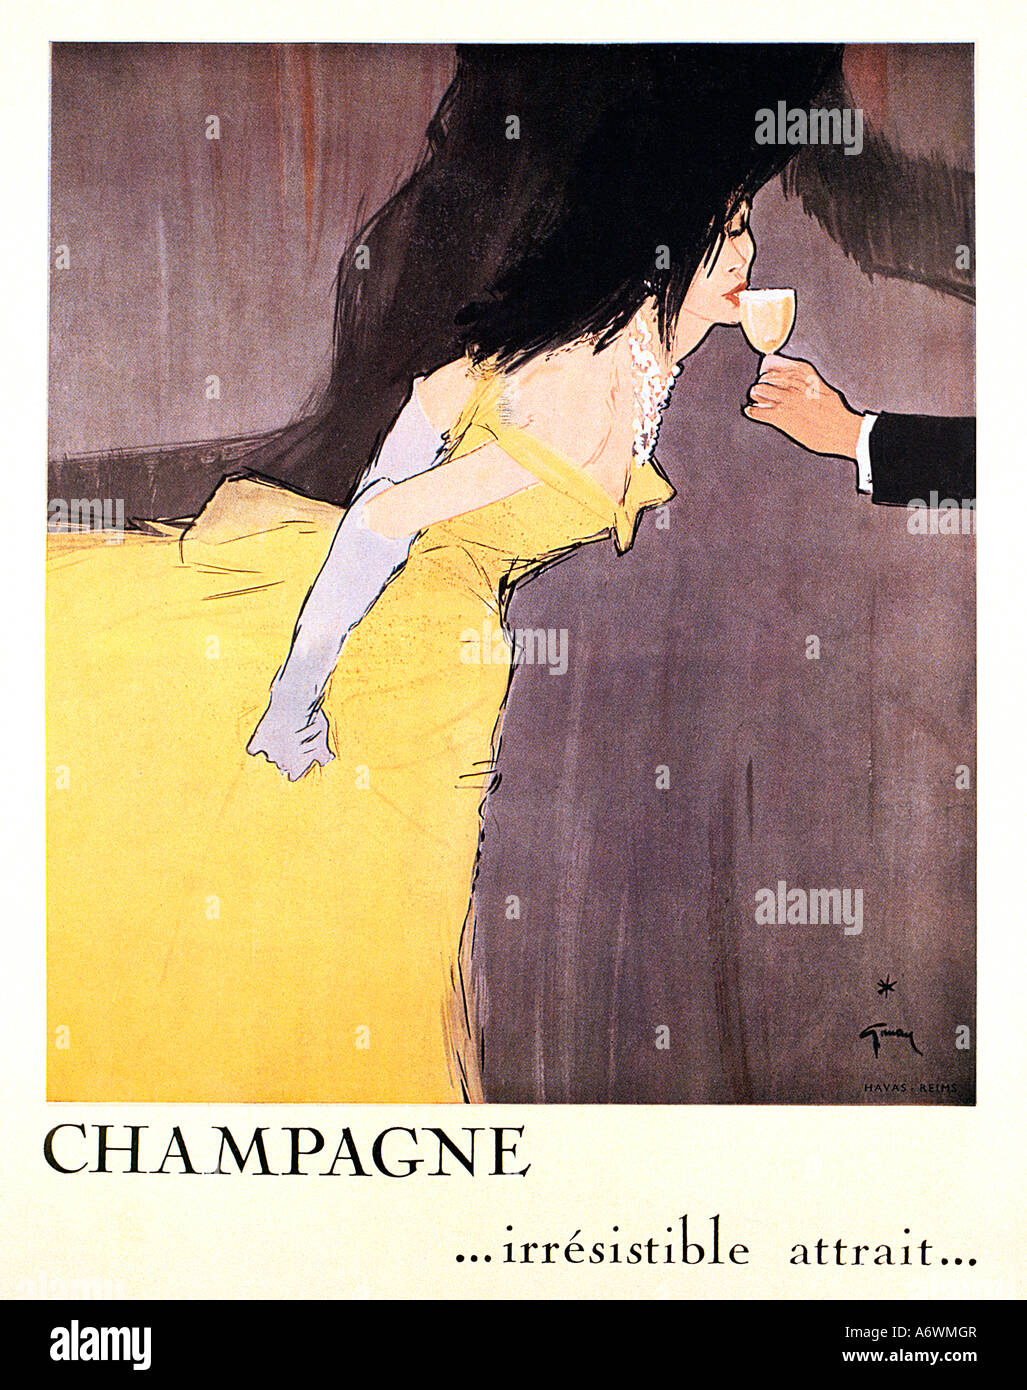 Champagne irresistibile Attrait 1940s manifesto francese rende lo champagne irresistably attraente Foto Stock